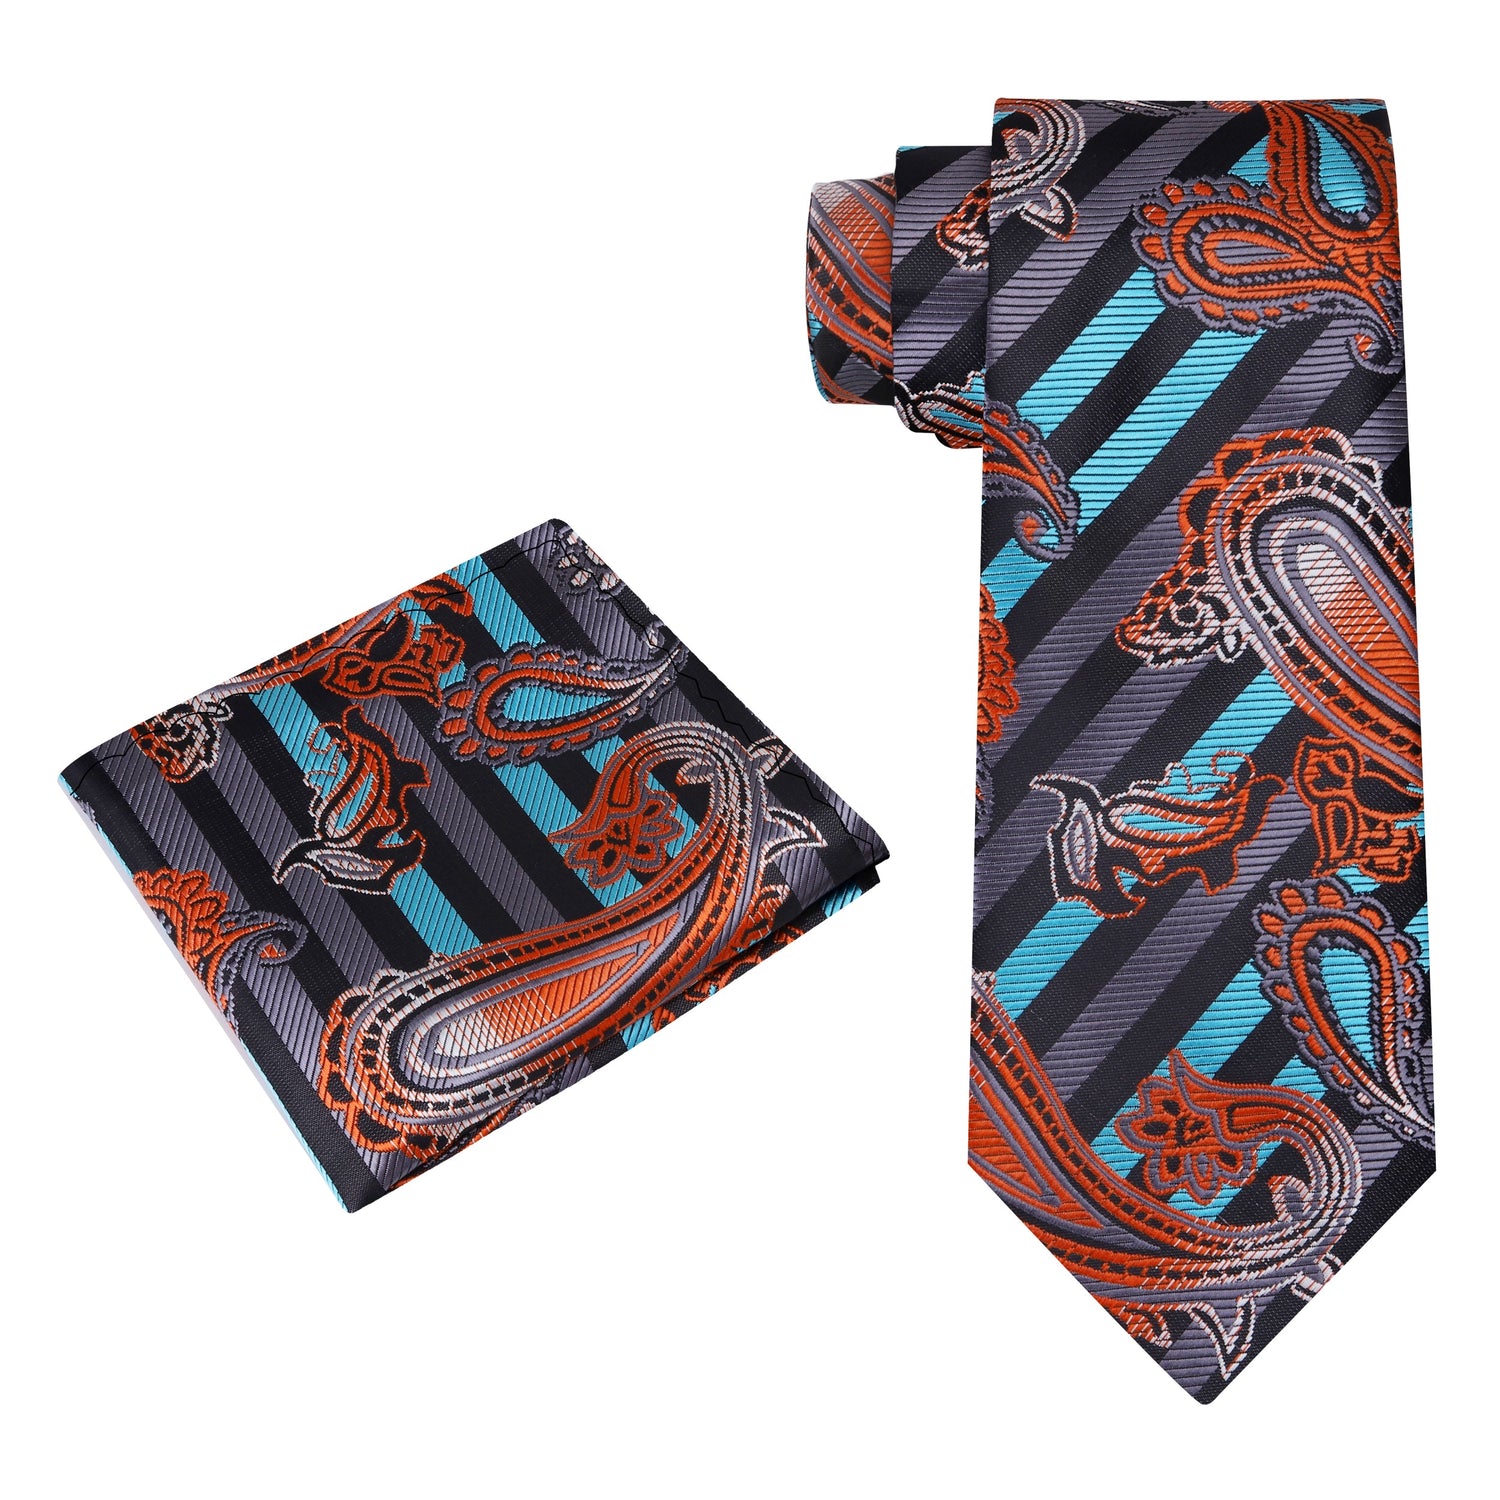 Alt View: Aqua, Orange, Black Stripe with Paisley Pattern Silk Necktie, Matching Pocket Square